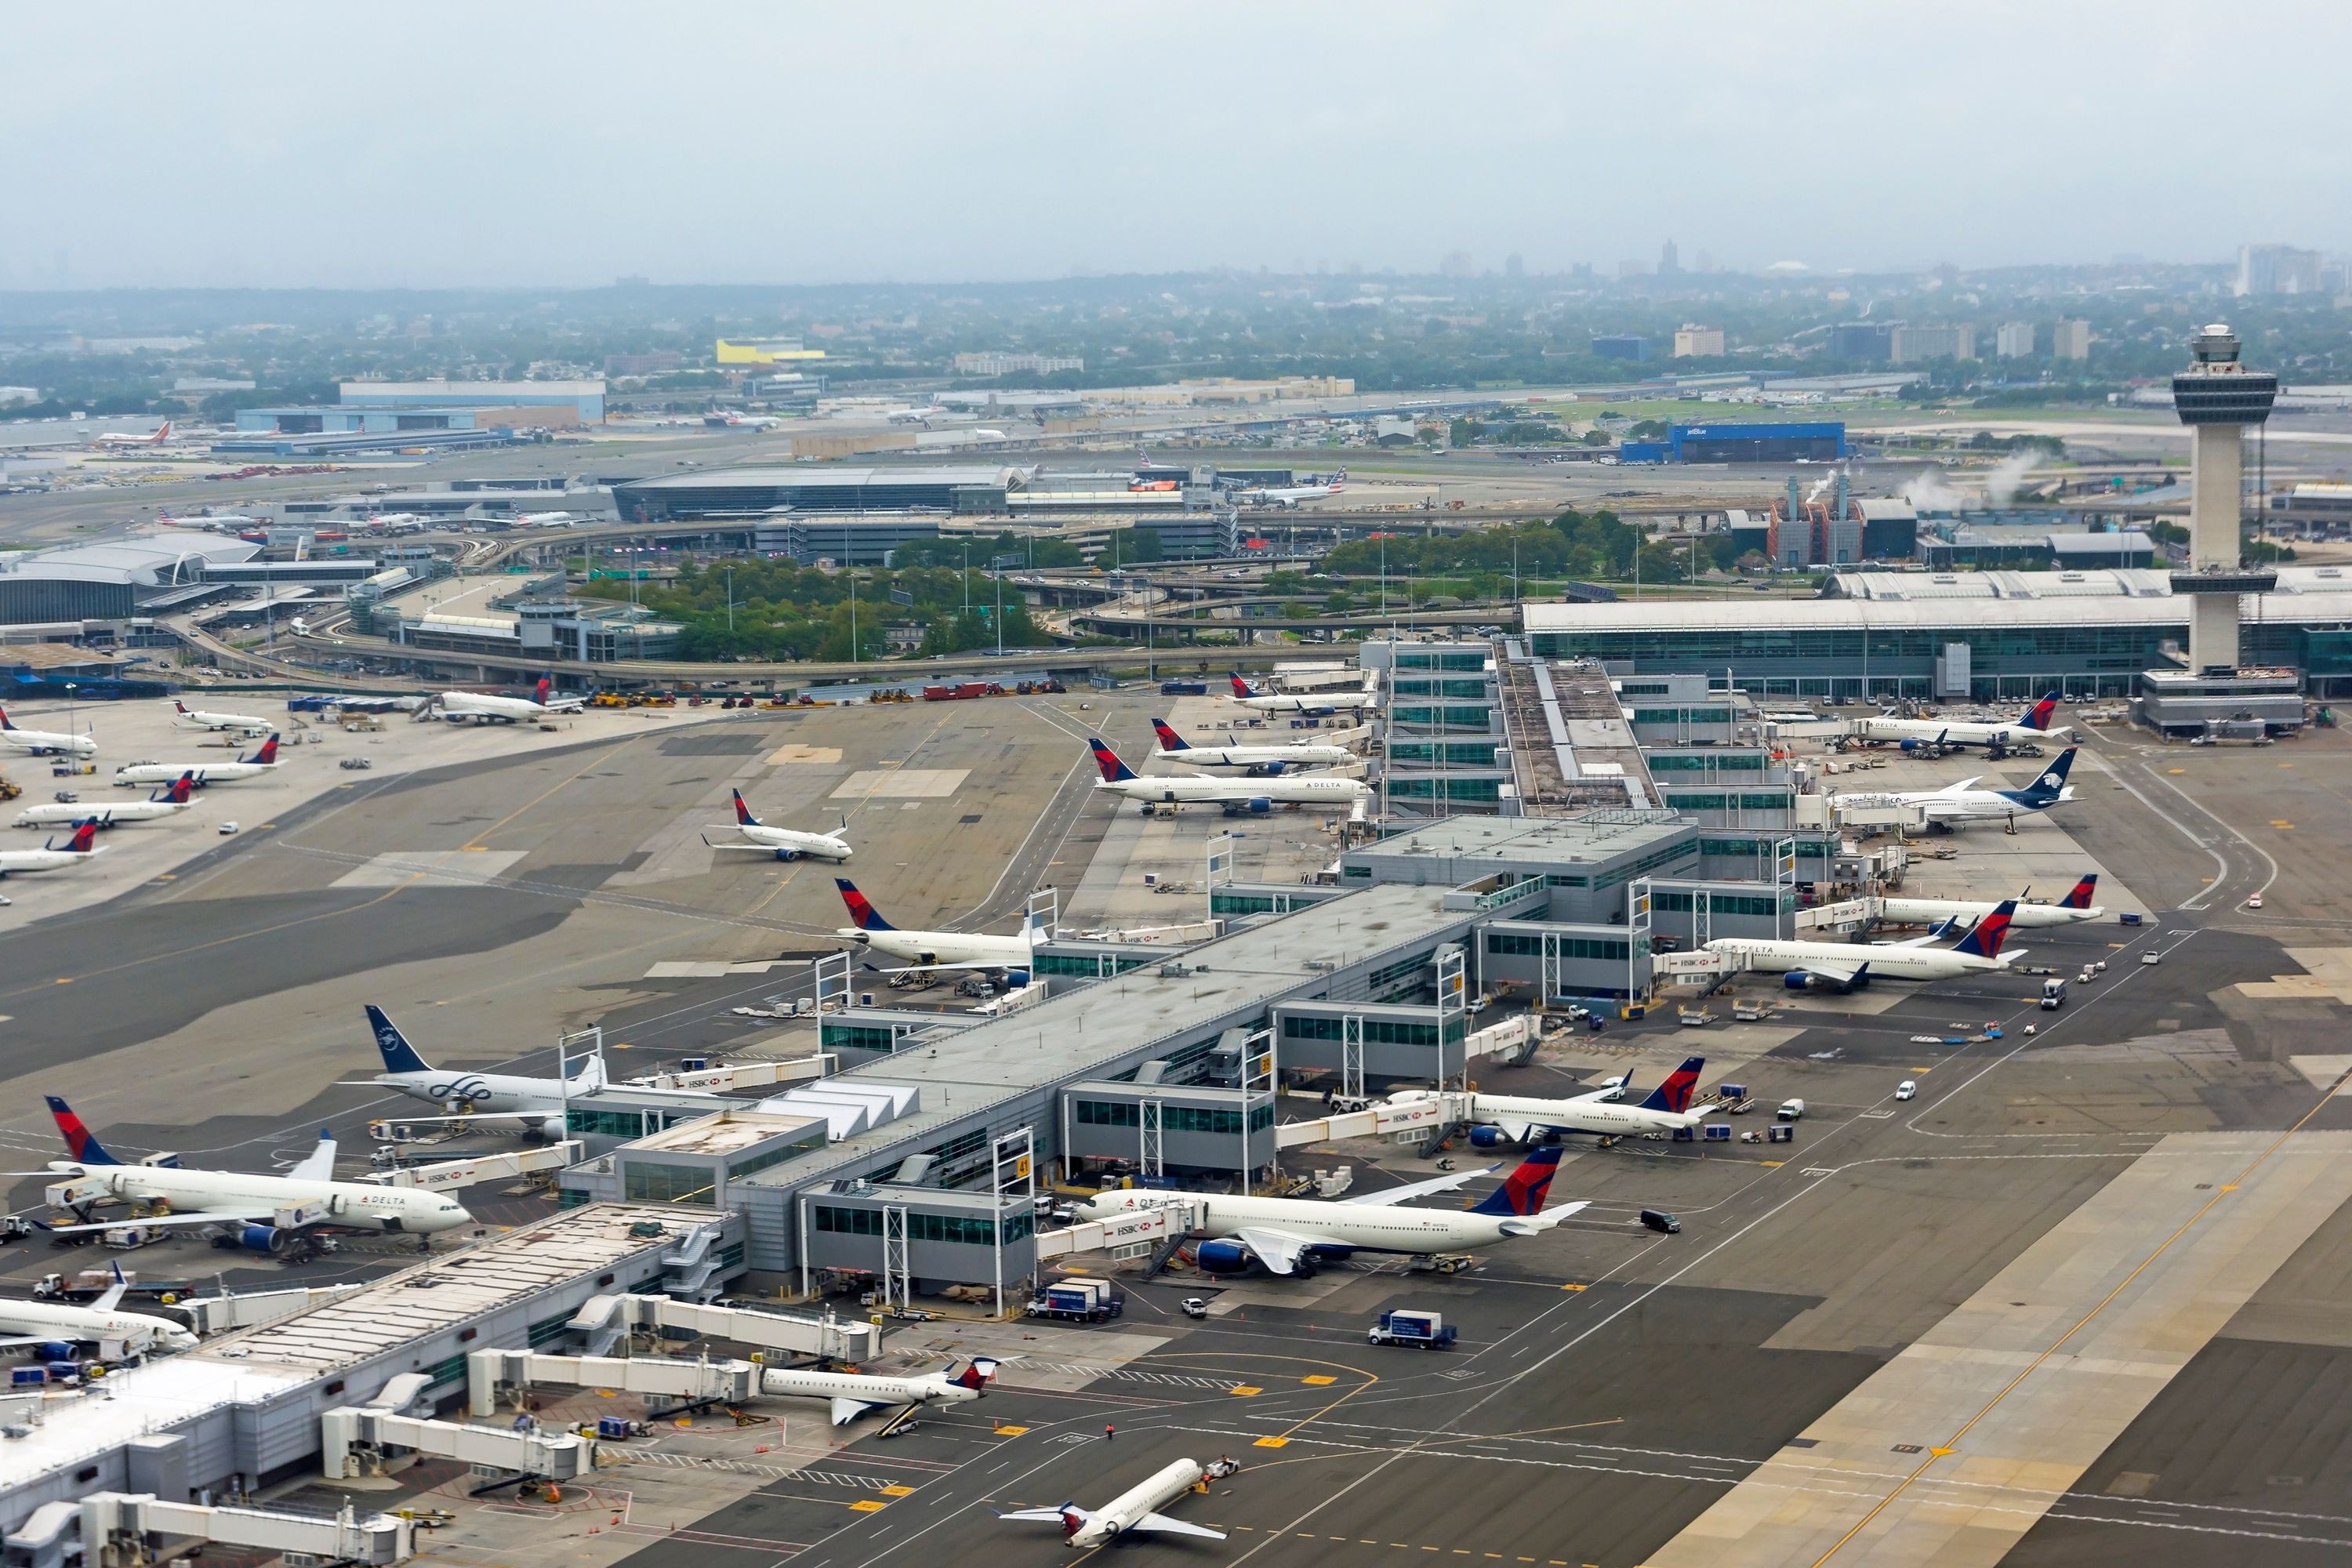 View of Delta Air Lines Terminal at New York-JFK Airport.